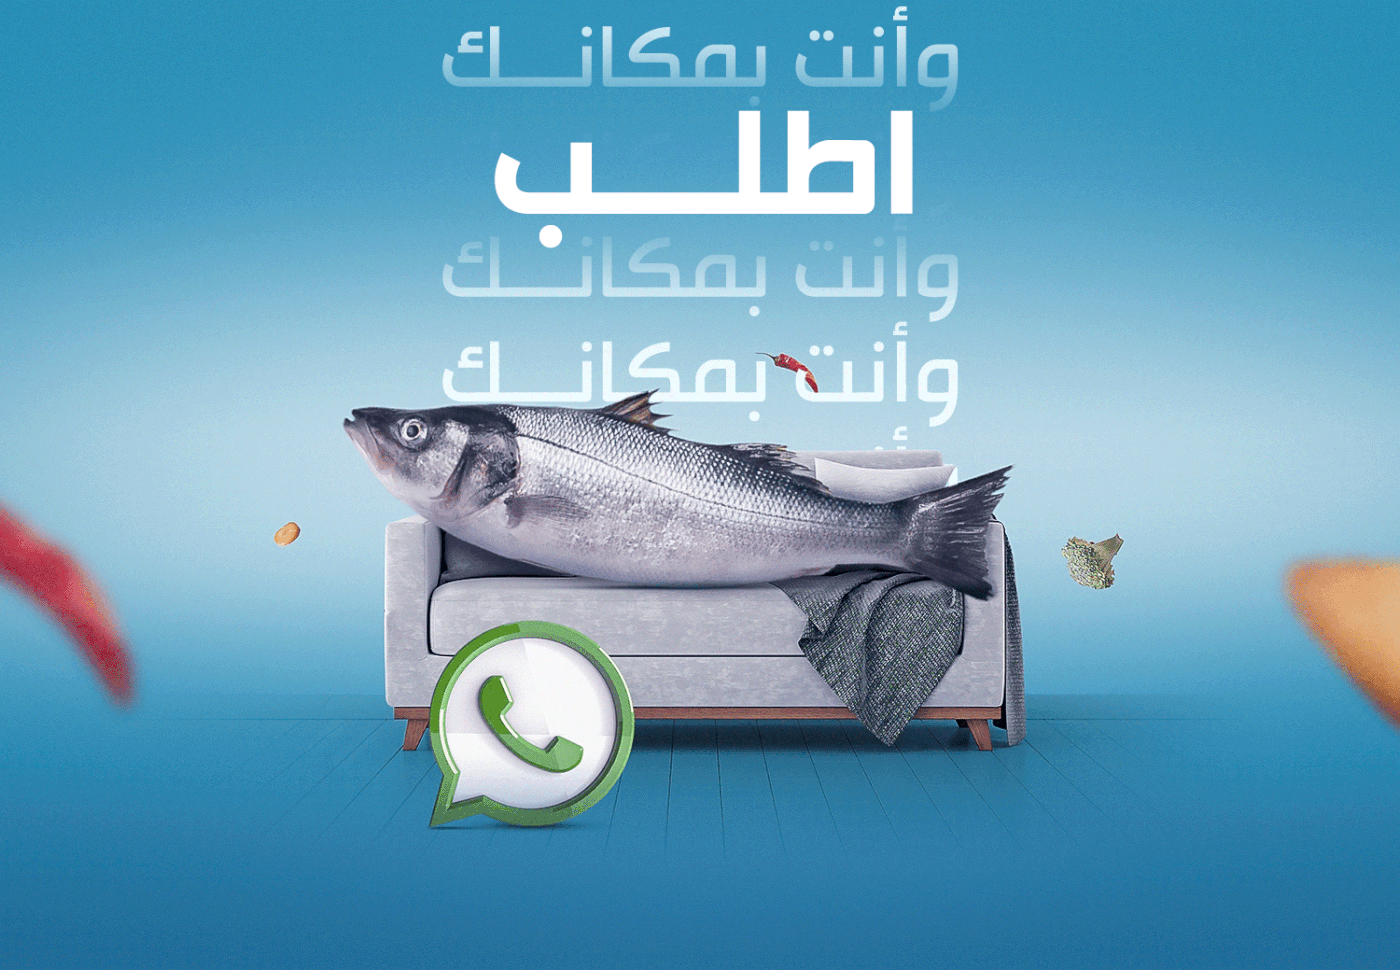 inspiration kinetic typography poster sea fish social media سوشيال ميديا photoshop on the ipad PSDailychallenge creative ads gif